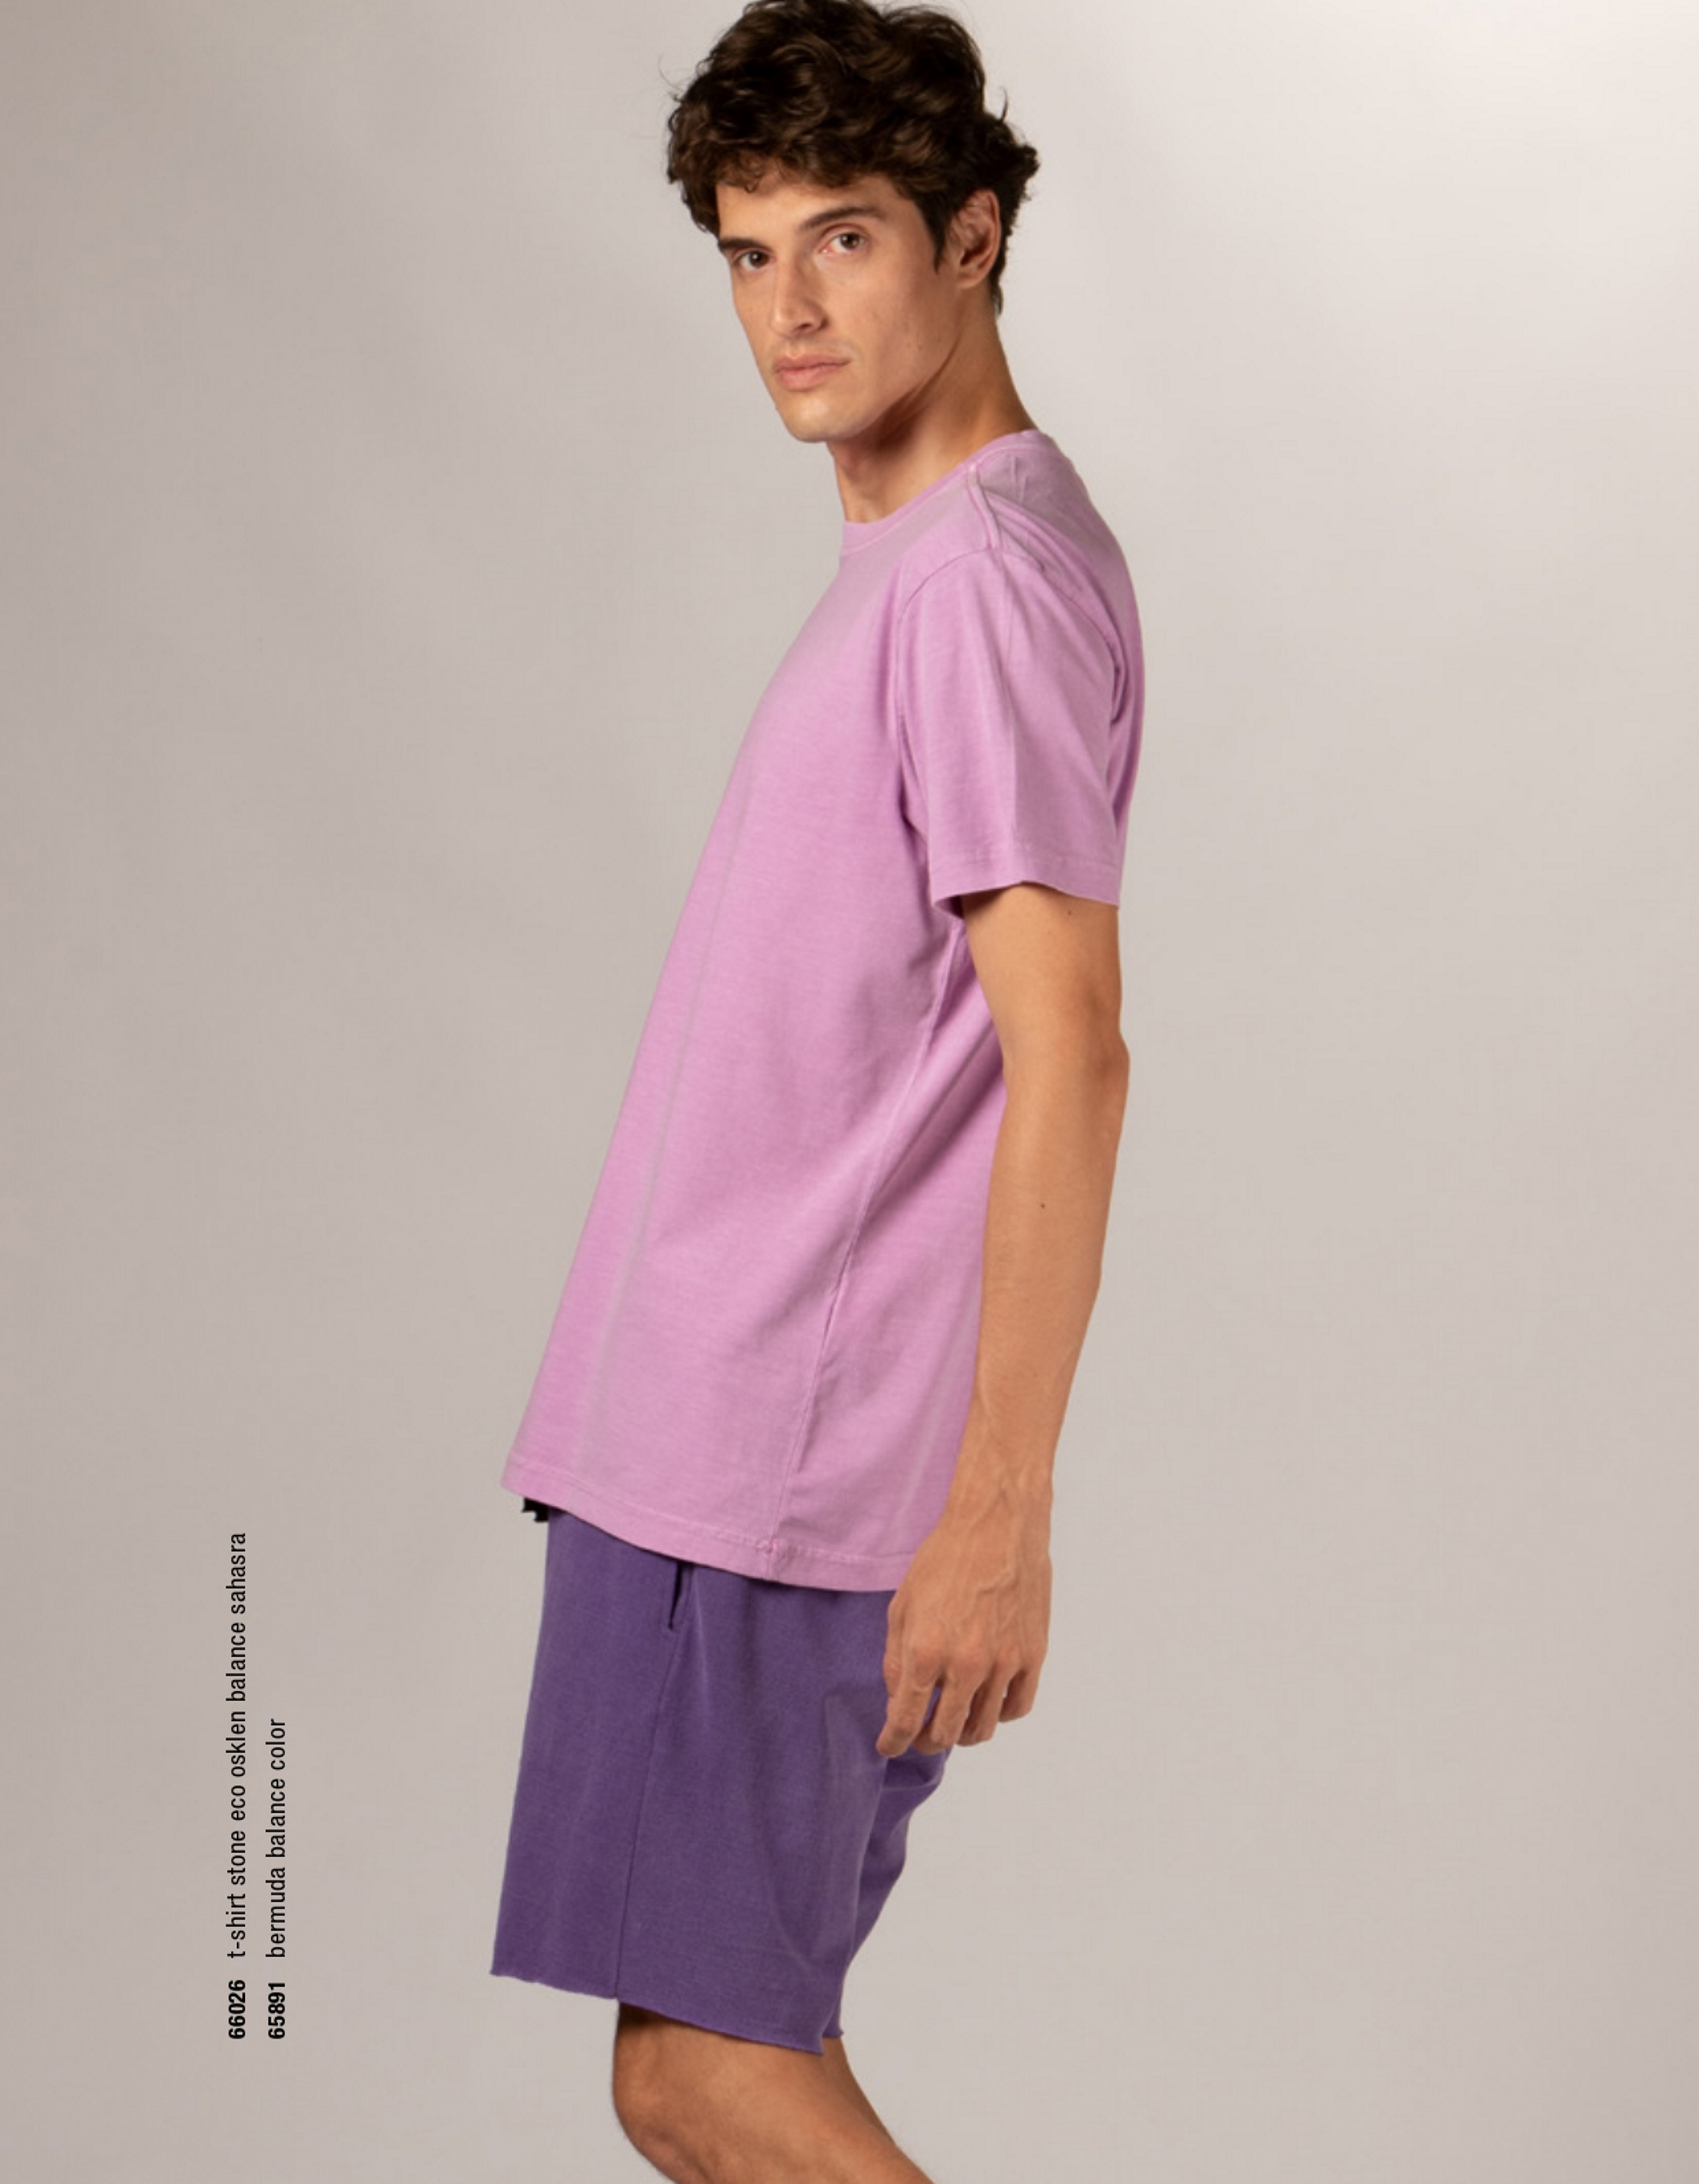 T-shirt Stone Eco B Sahasra_PVP 49€ + Bermuda Balance color_PVP 129€